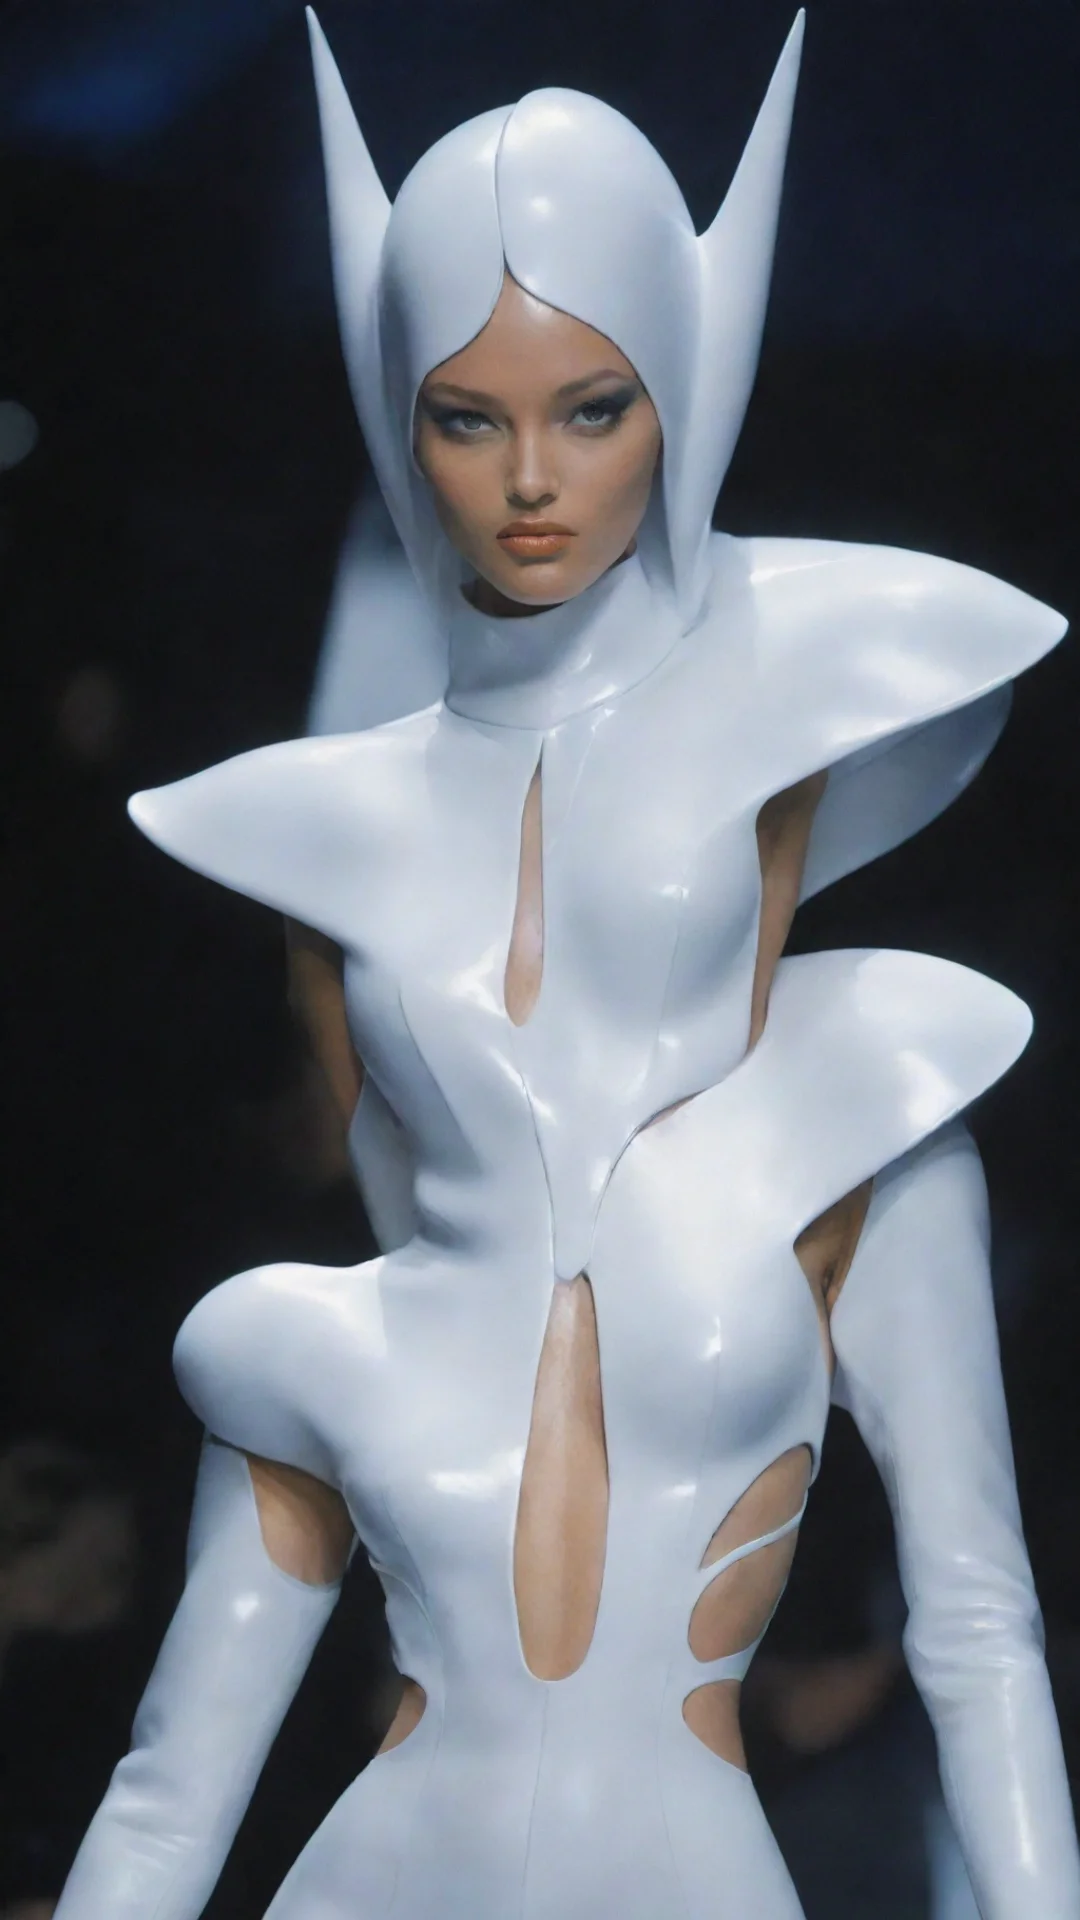 artstation art thierry mugler futuristic fashion on model confident engaging wow 3 tall